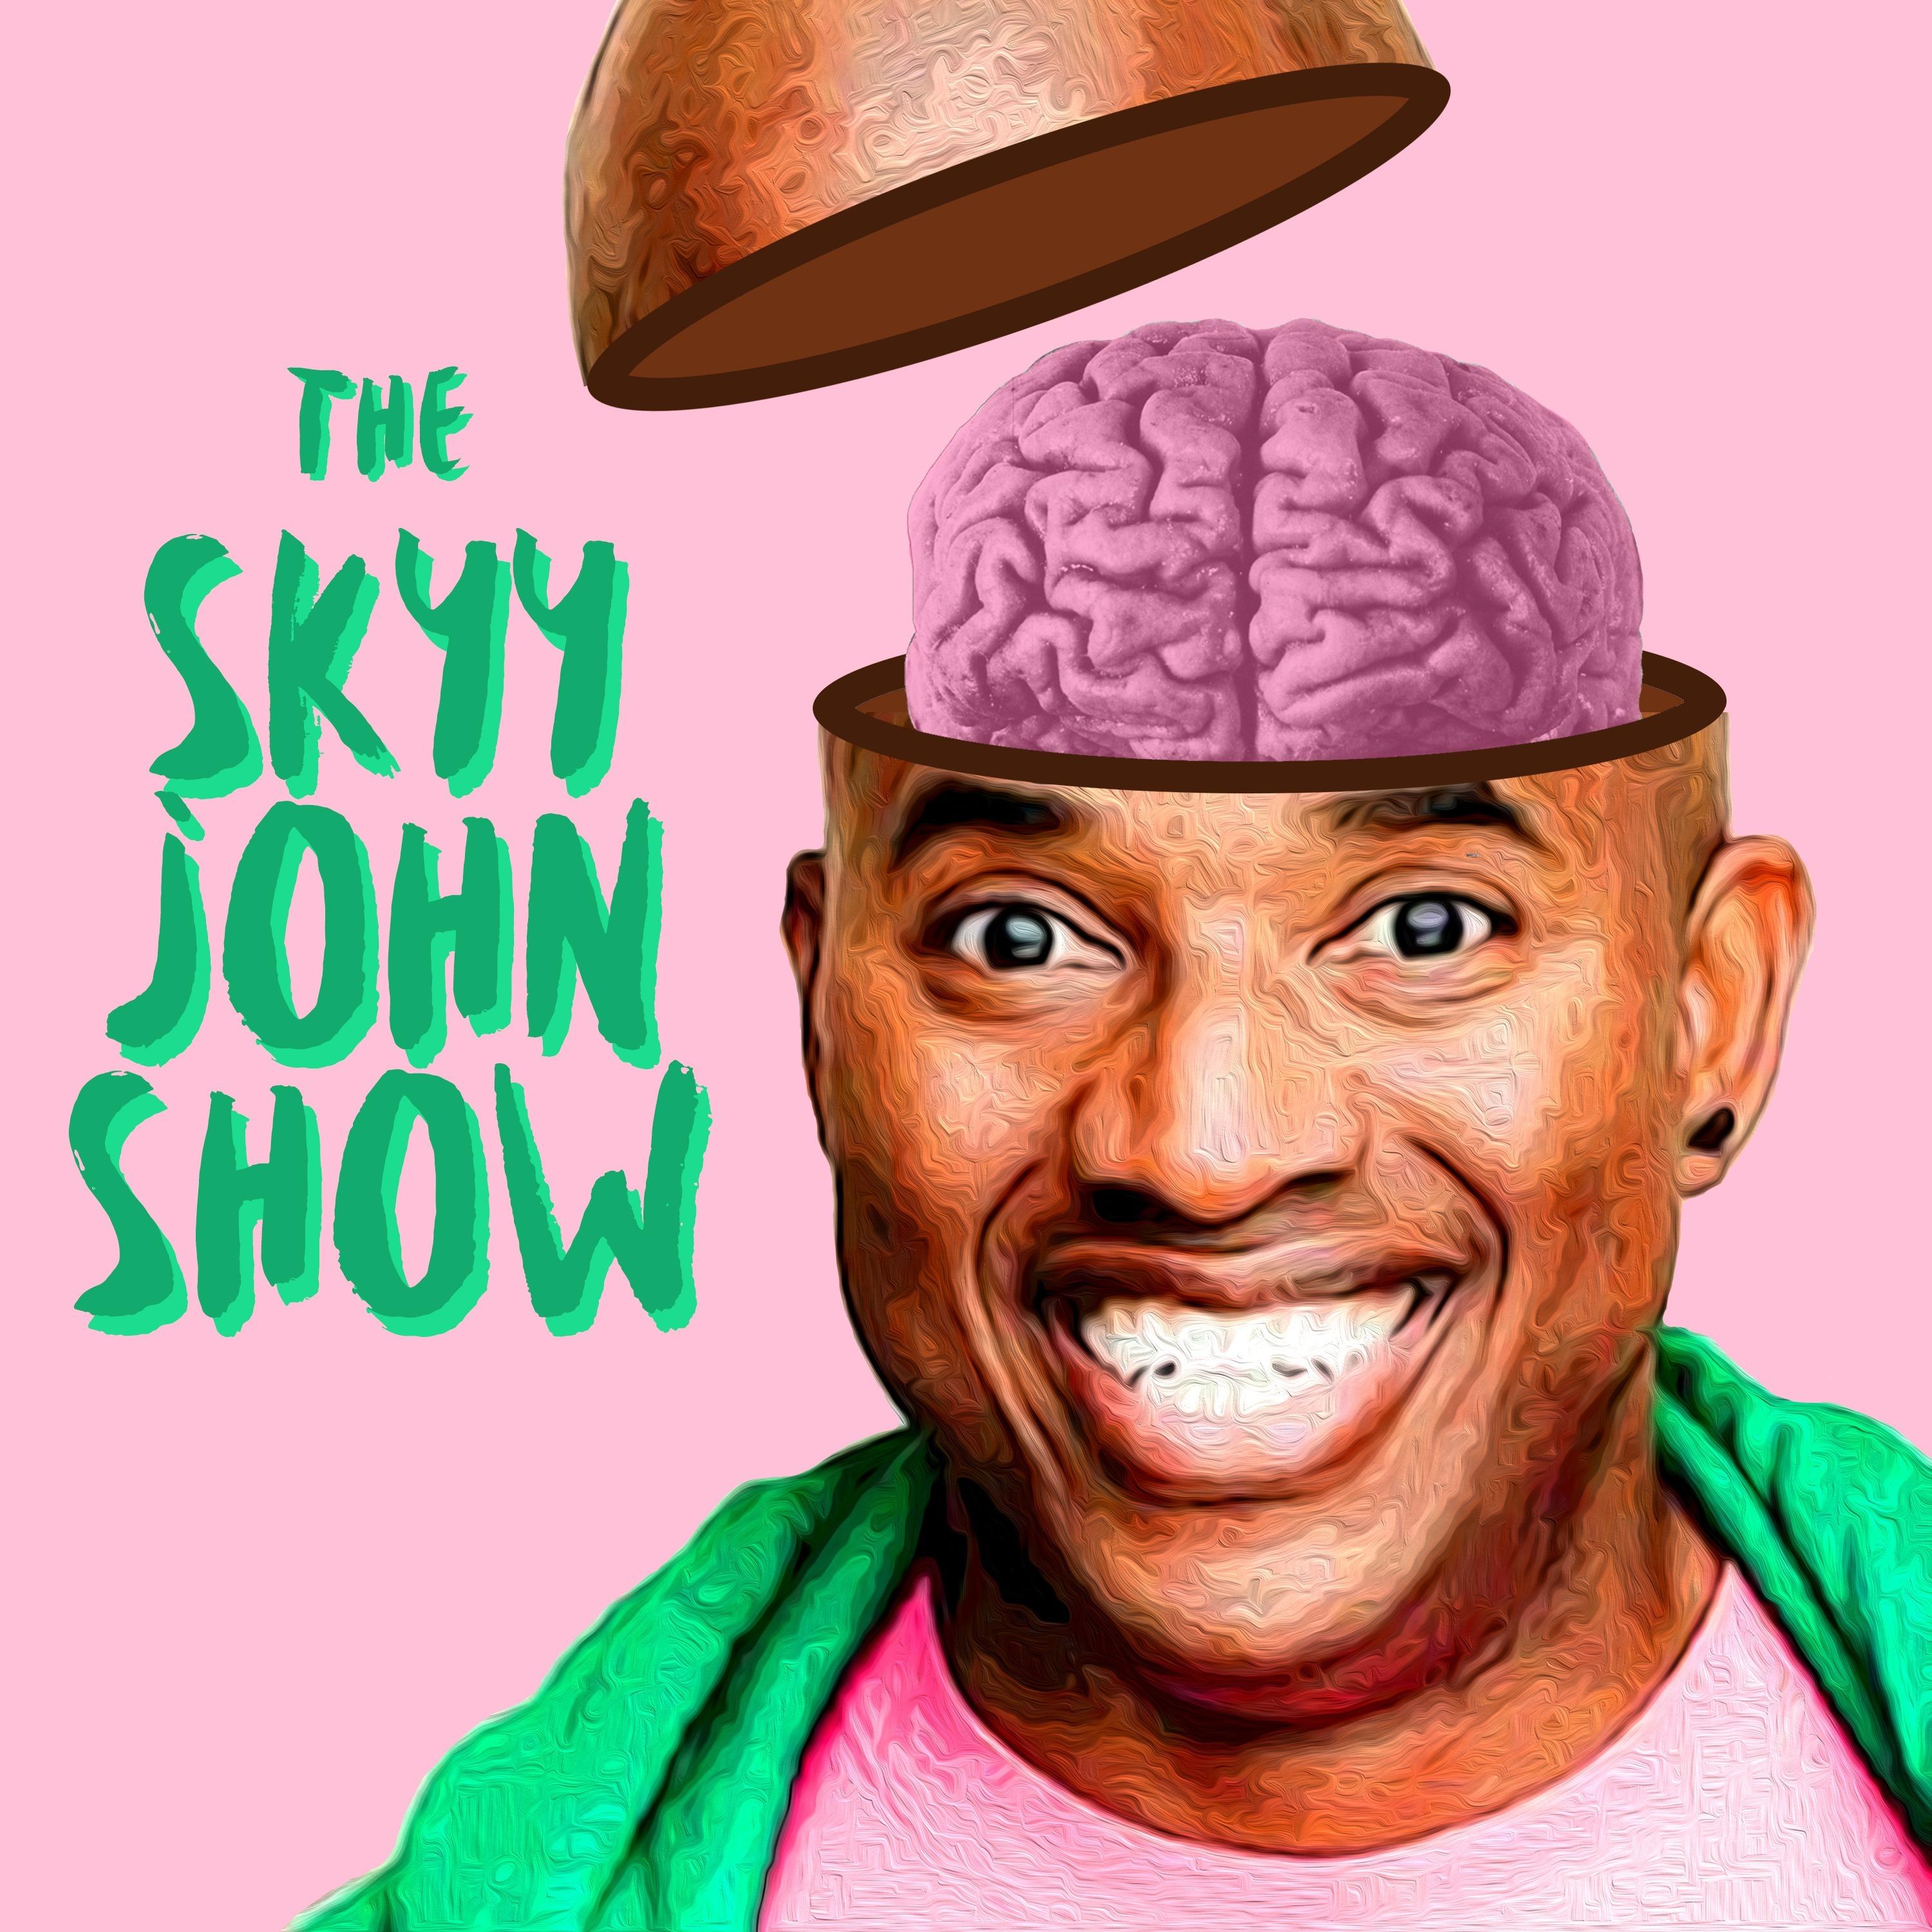 The Skyy John Show